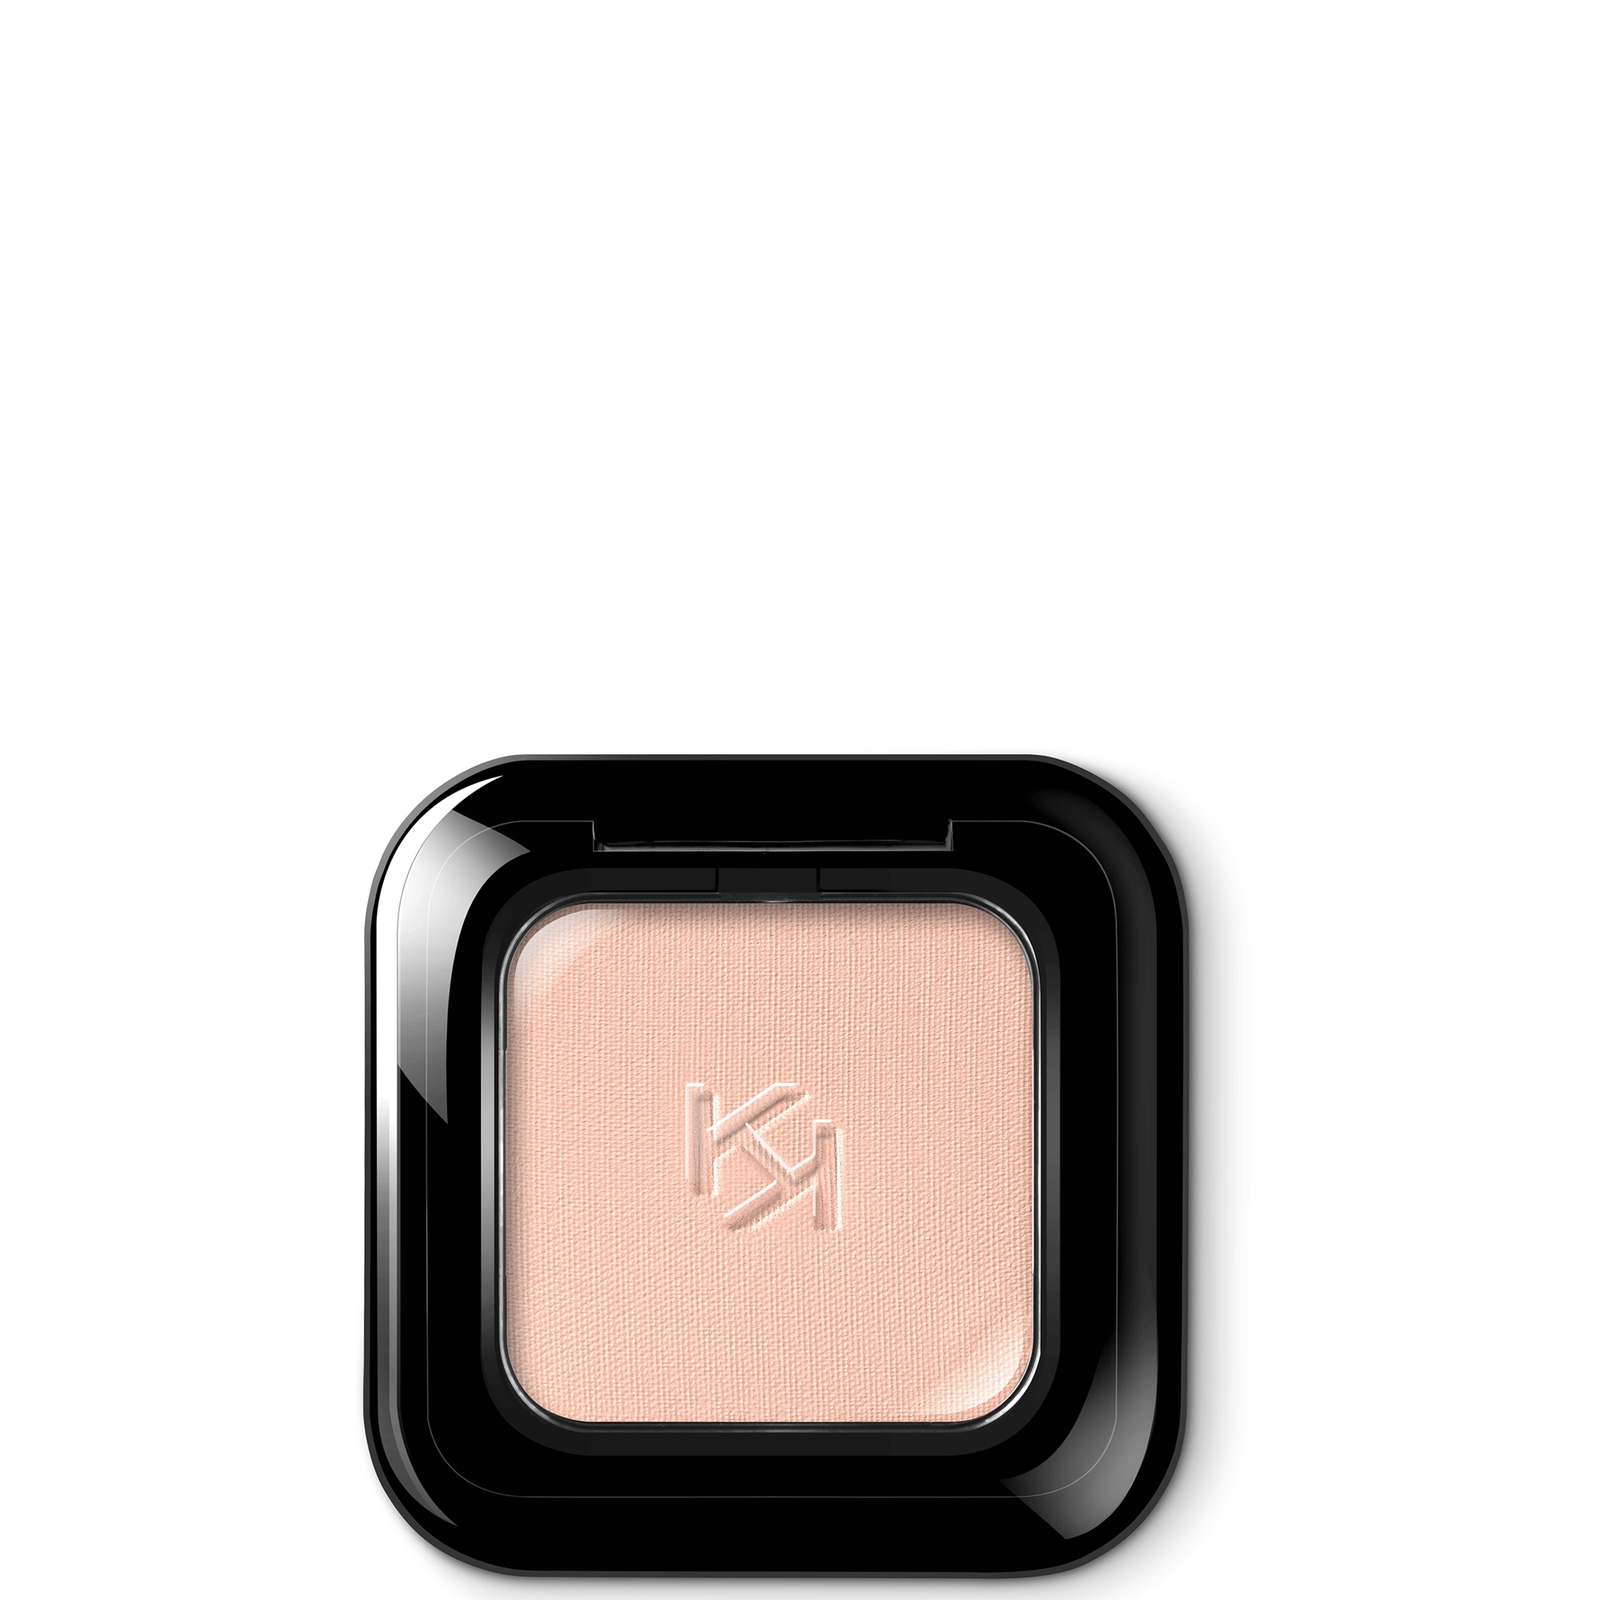 KIKO Milano High Pigment Eyeshadow 1.5g (Various Shades) - 19 Matte Neutral Beige